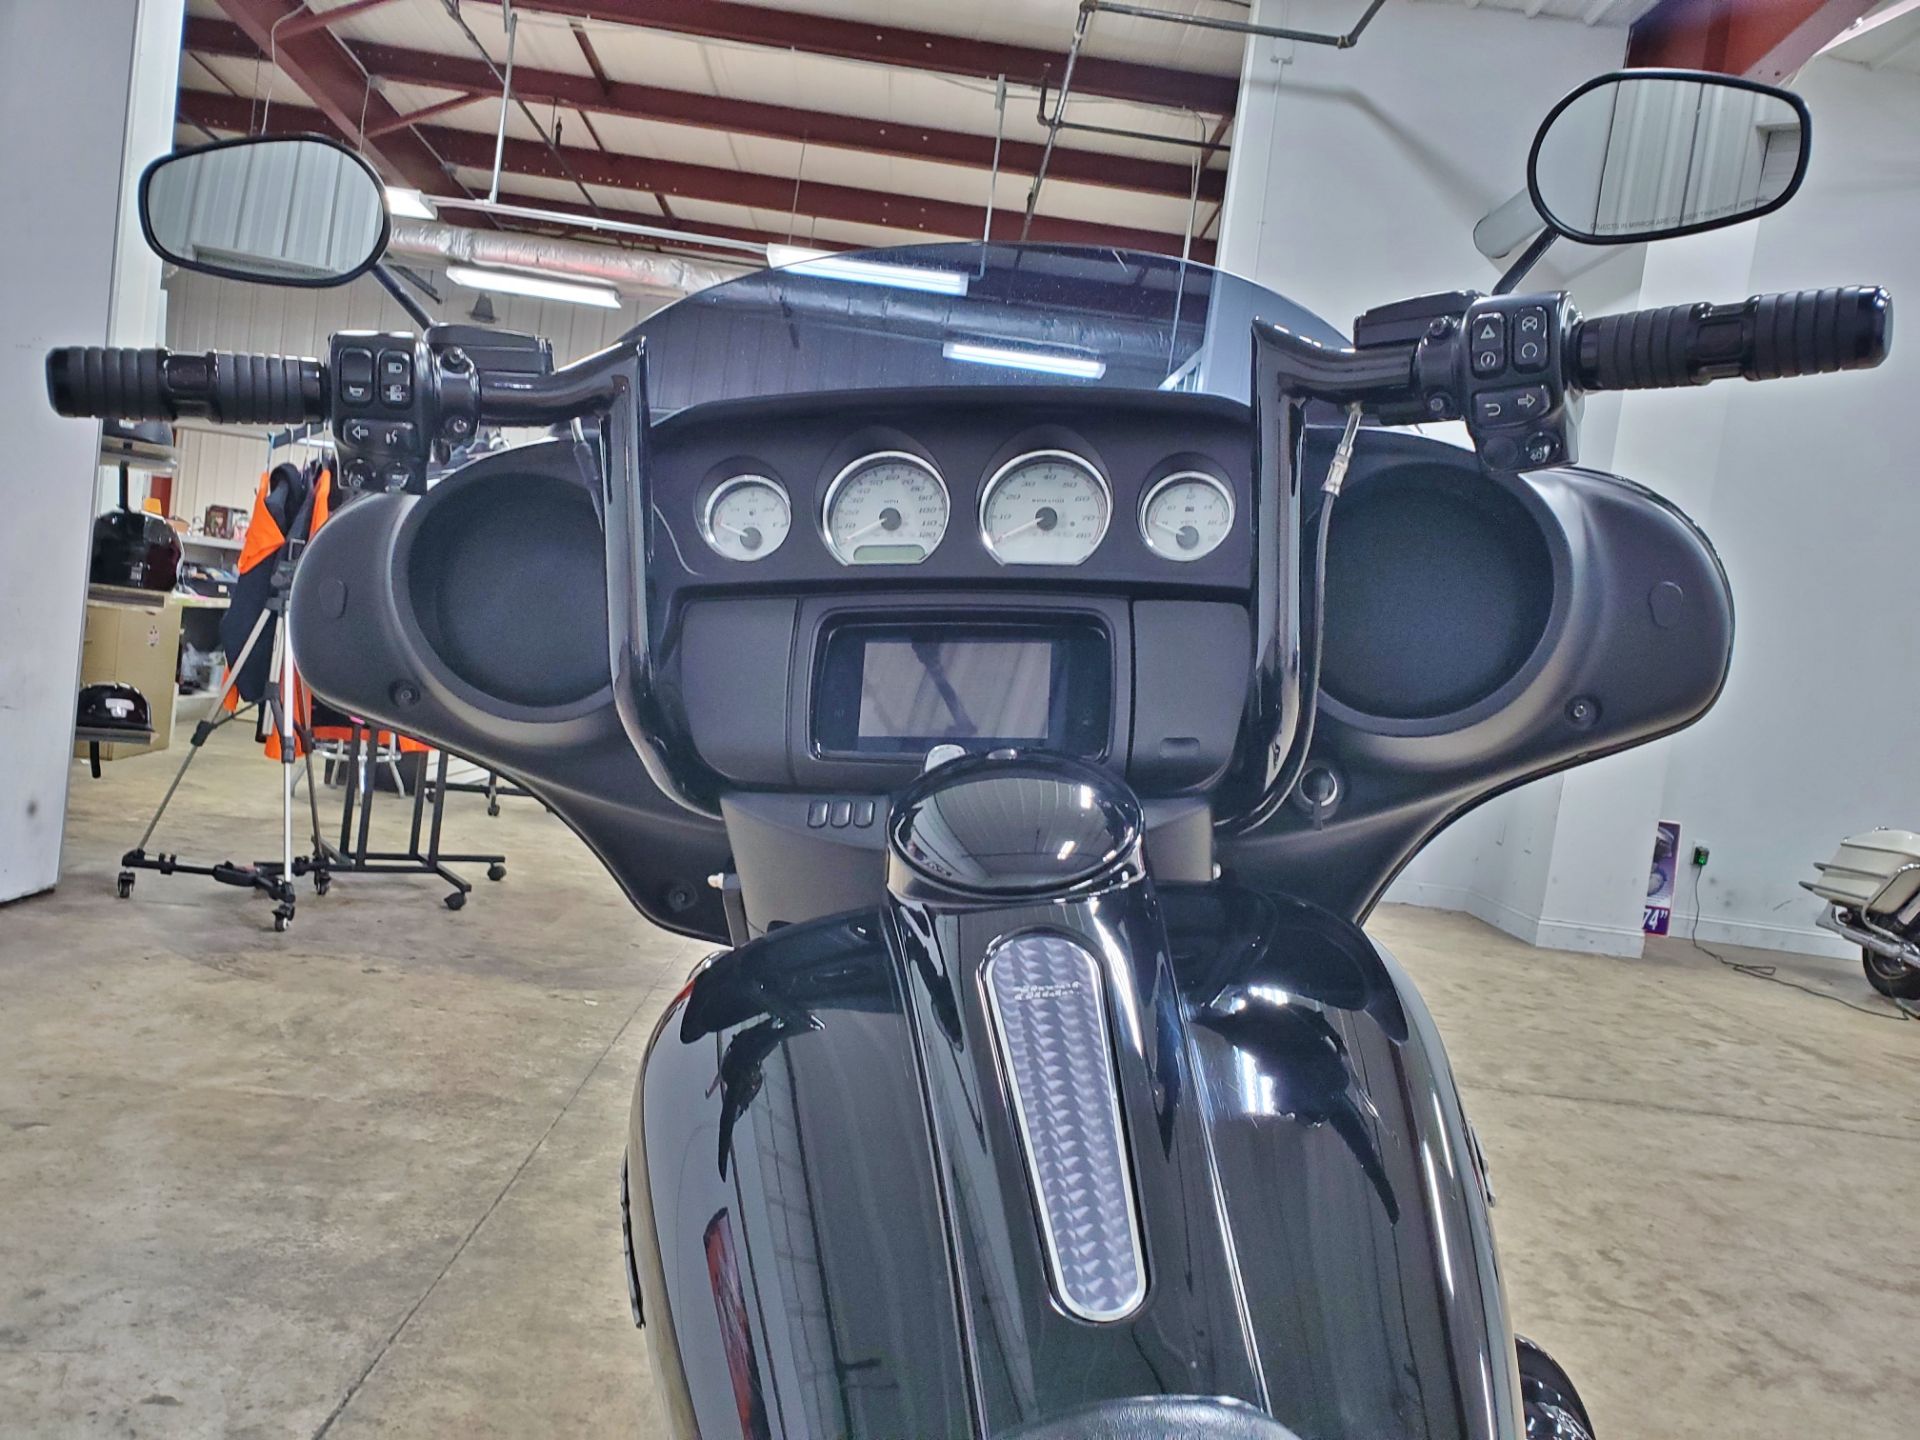 2019 Harley-Davidson Street Glide® in Sandusky, Ohio - Photo 11